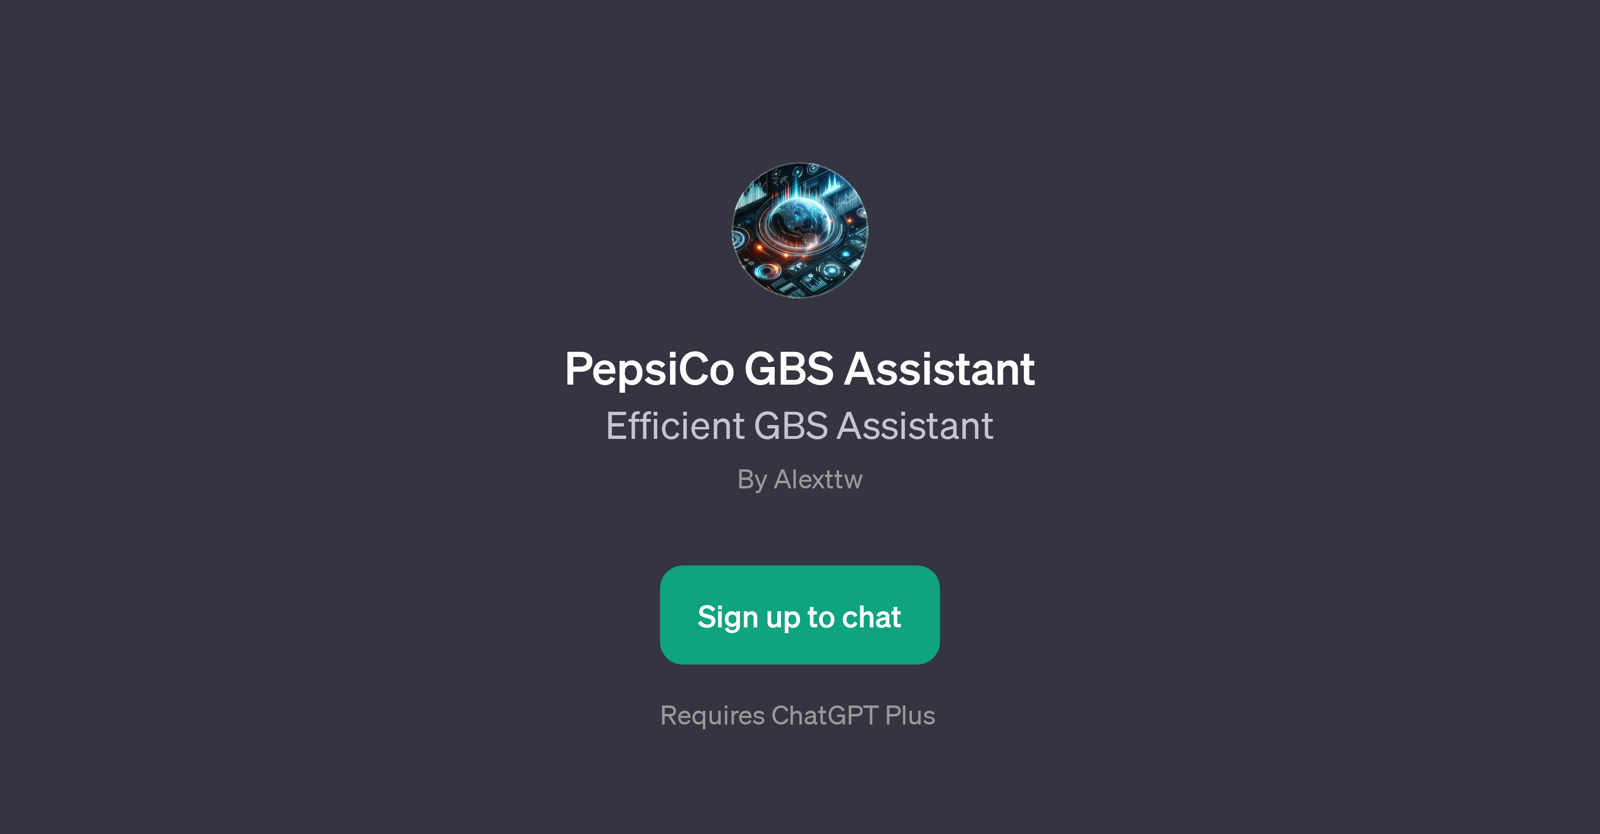 PepsiCo GBS Assistant website